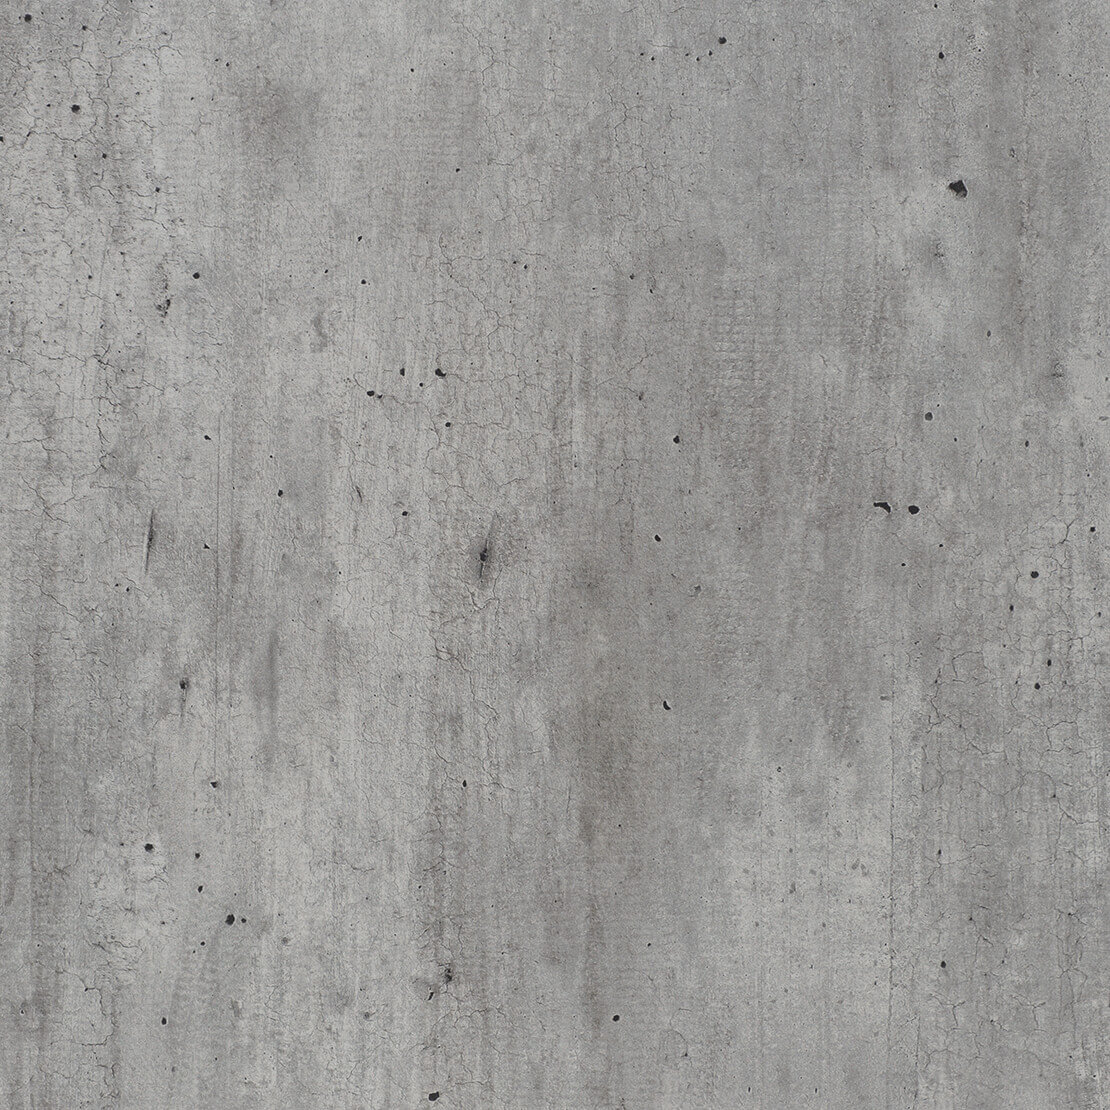 Spectra Grey Shuttered Concrete décor swatch.